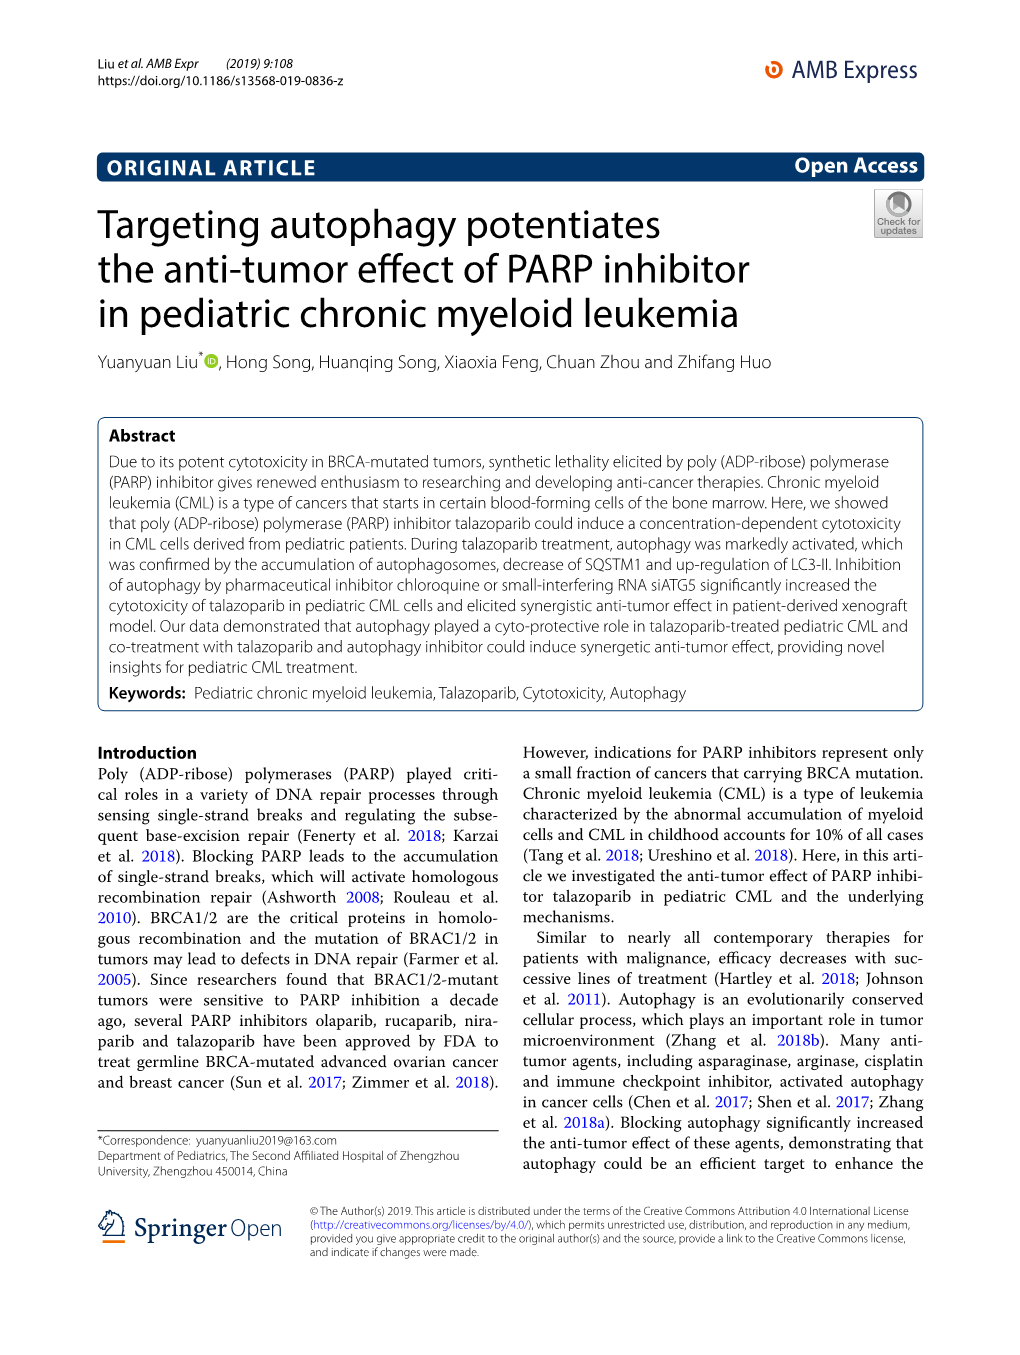 Targeting Autophagy Potentiates the Anti-Tumor Effect of PARP Inhibitor in Pediatric Chronic Myeloid Leukemia